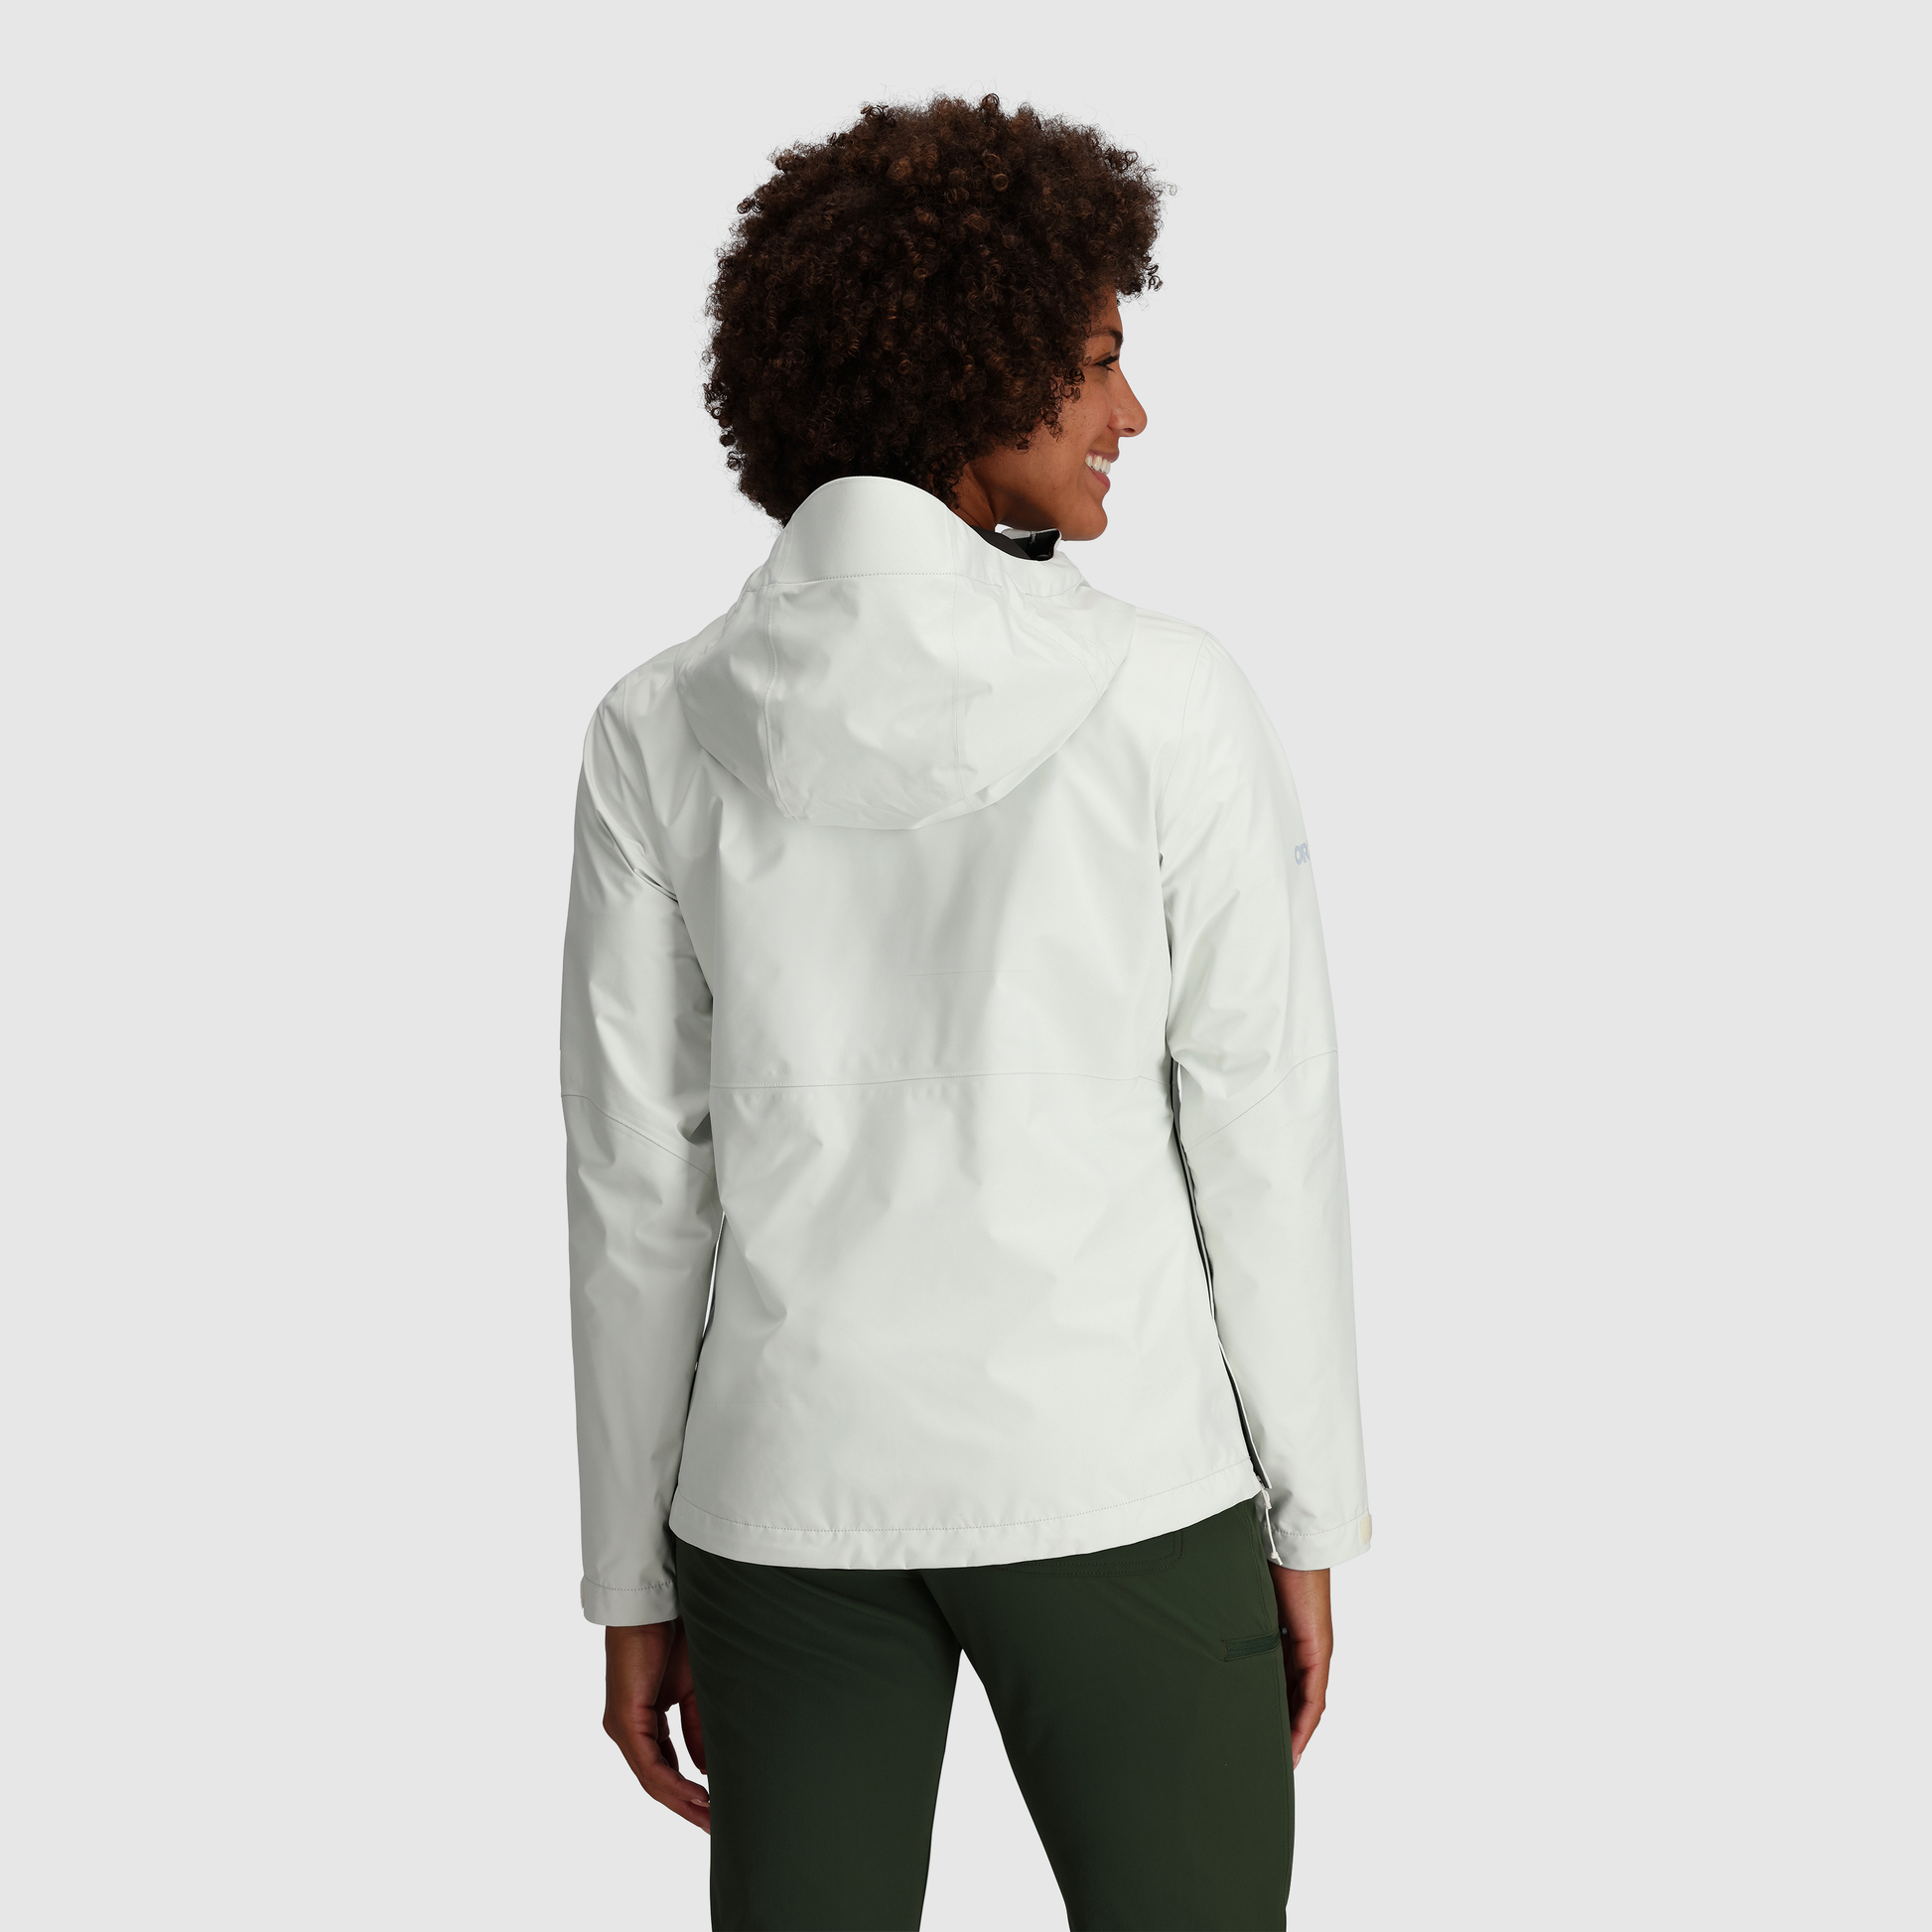 Buy Outdoor Research Aspire Womens Goretex Plus Size Rain Shell Pants Black  1X - 4X Online